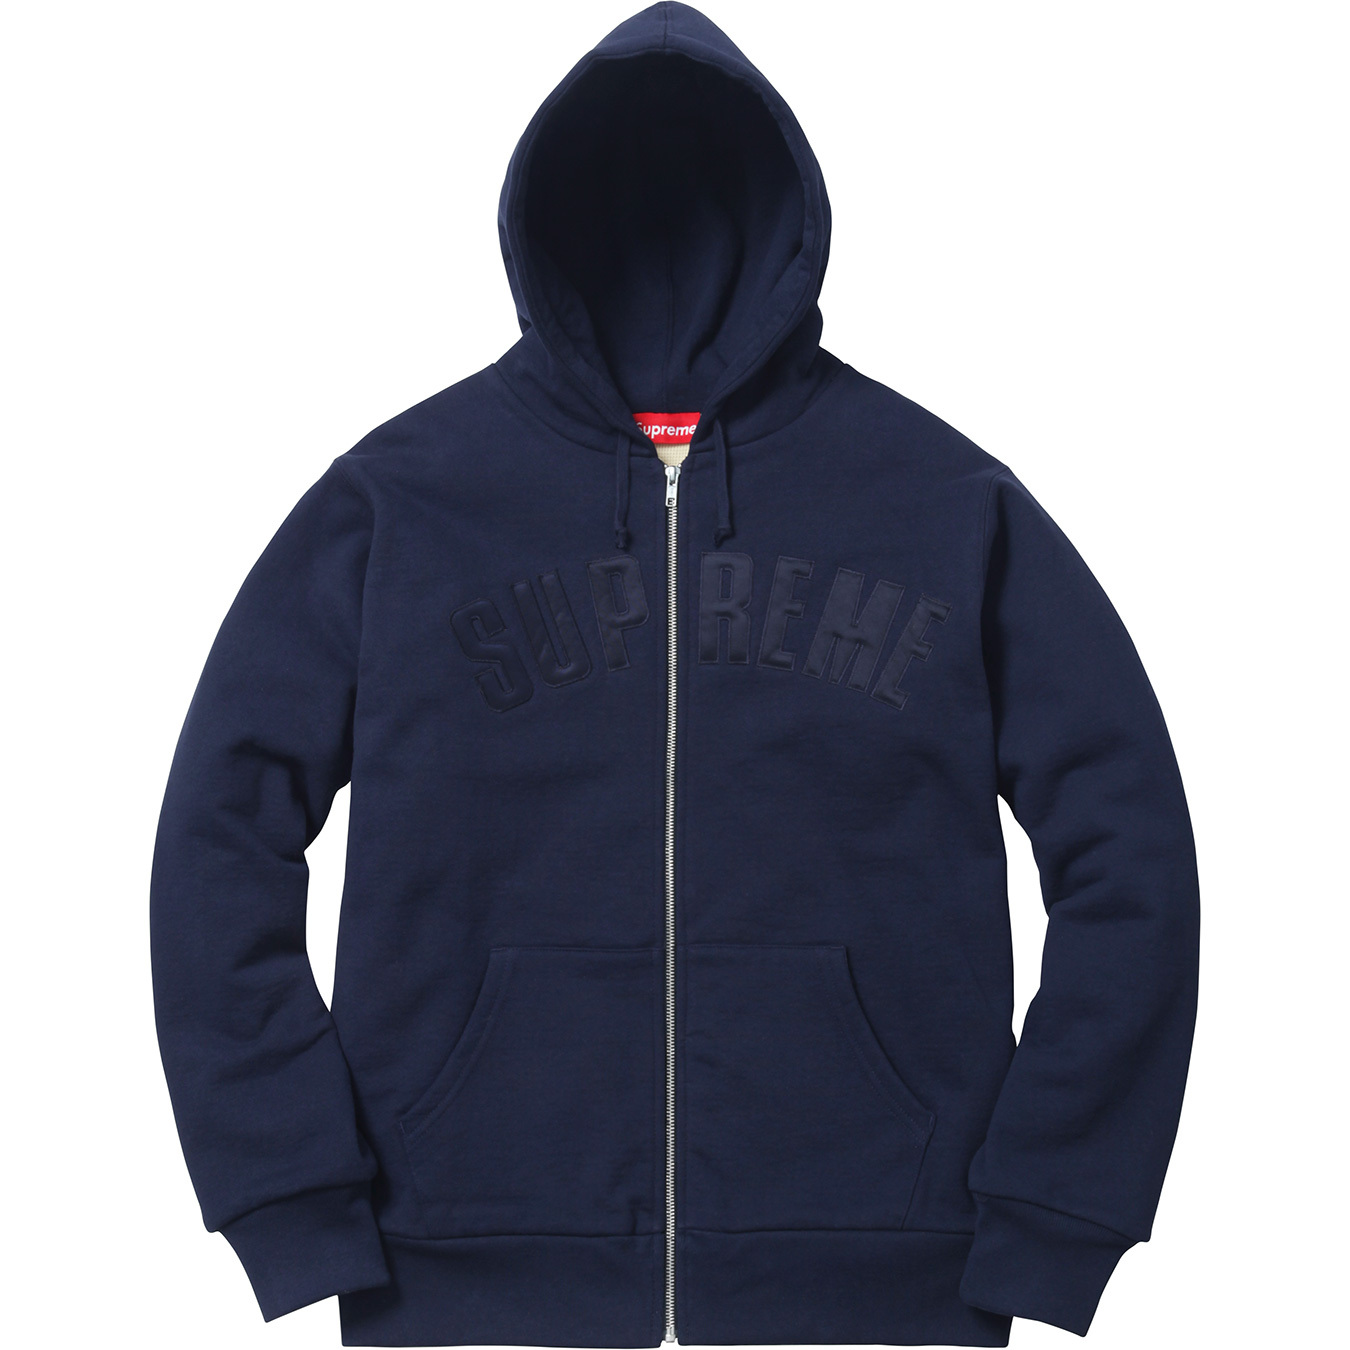 Supreme Arc Logo Thermal Zip Up Sweatshirt Navy - FW17